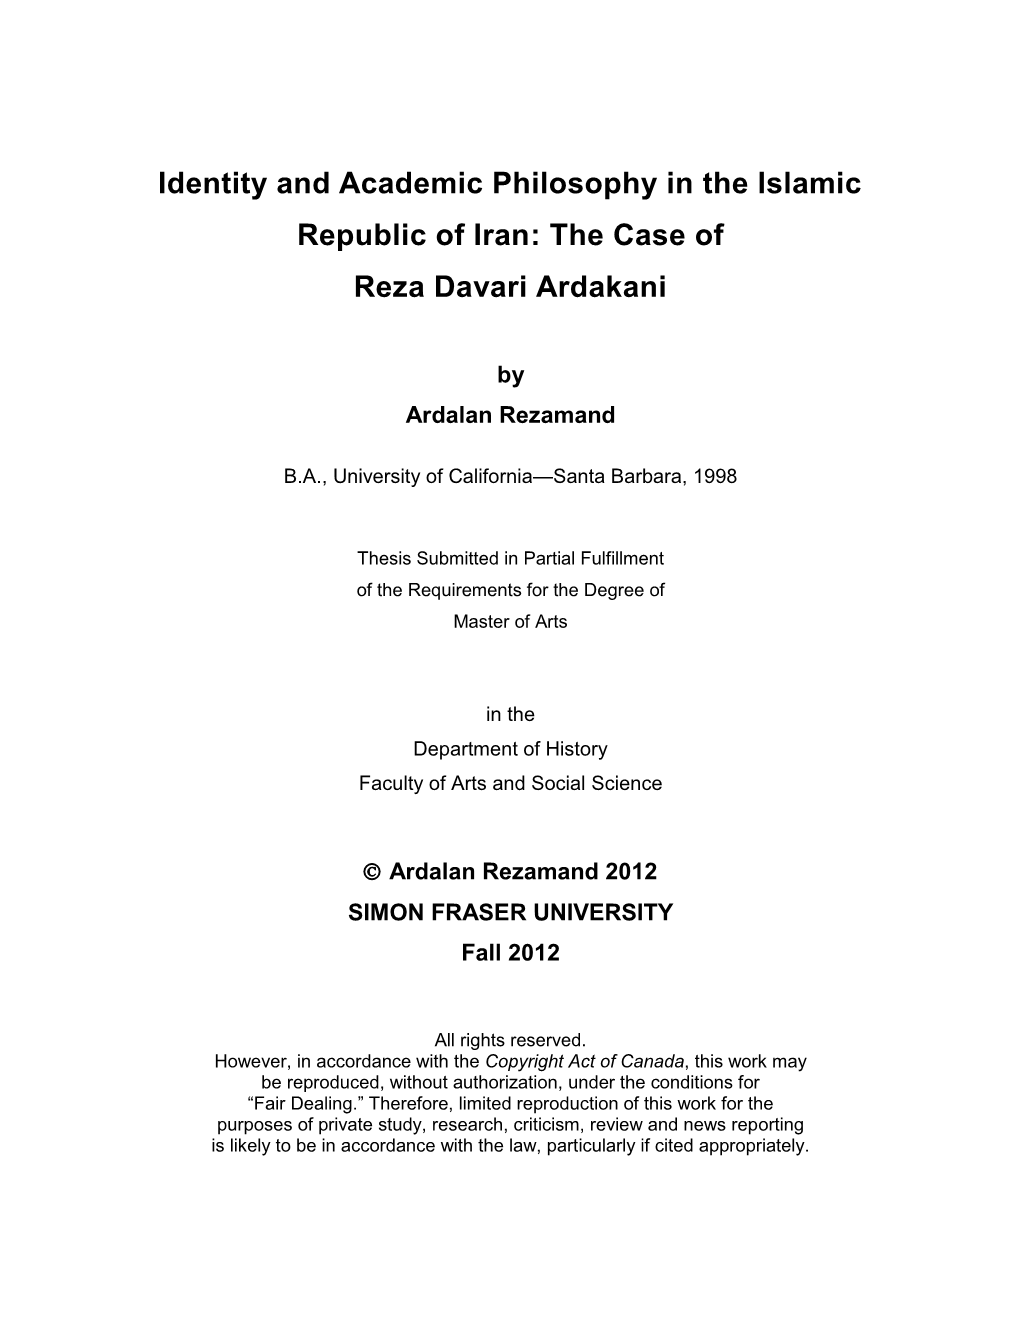 Identity and Academic Philosophy in the Islamic Republic of Iran: the Case of Reza Davari Ardakani